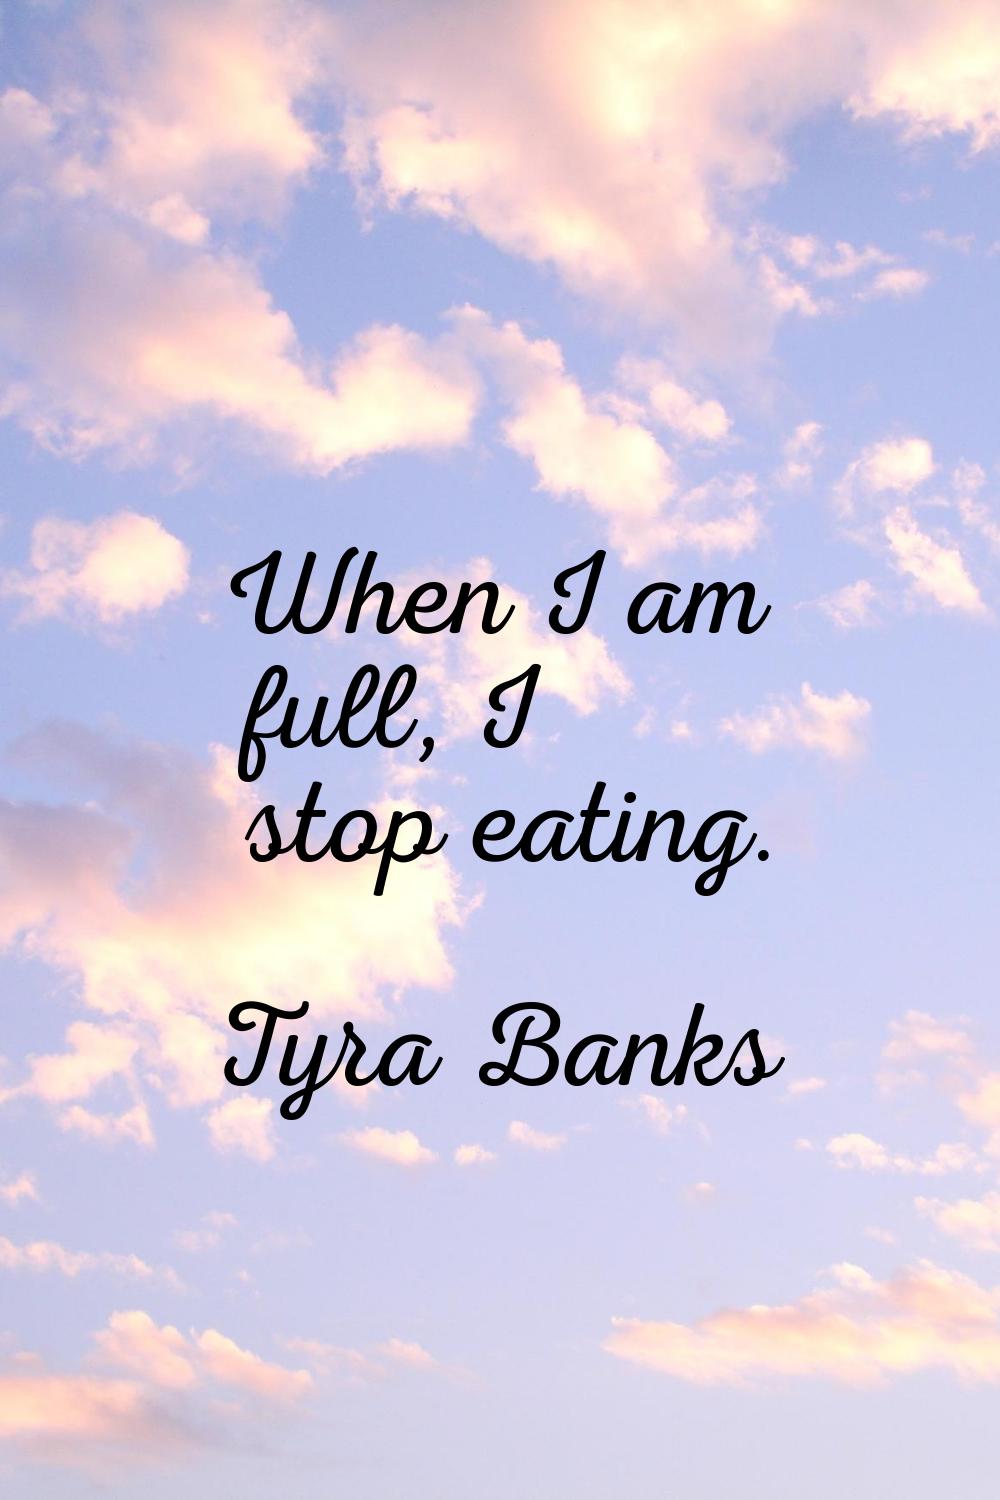 When I am full, I stop eating.